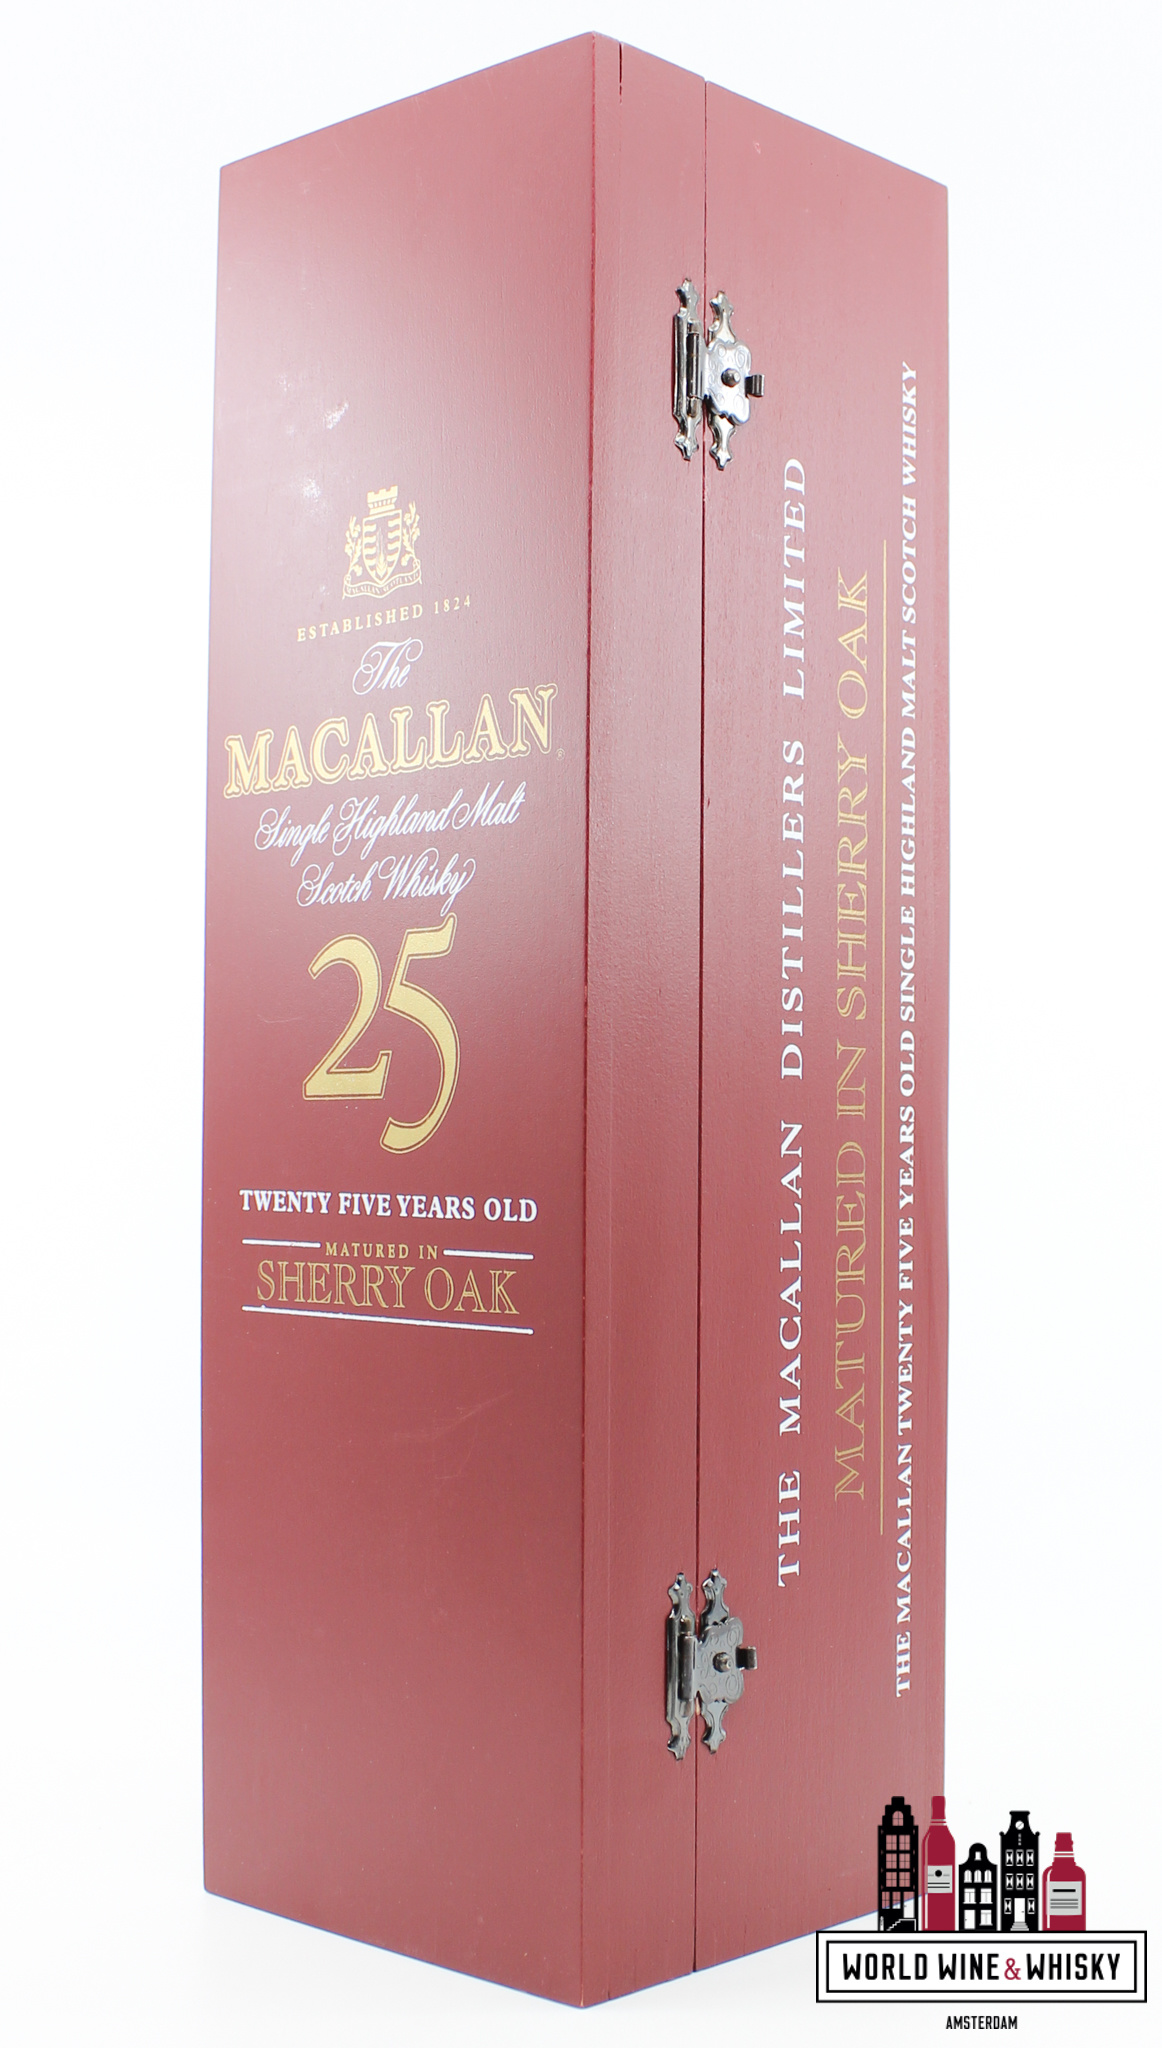 Macallan Macallan 25 Years Old Anniversary Malt - Sherry Oak 43% 700ml (In the red case)